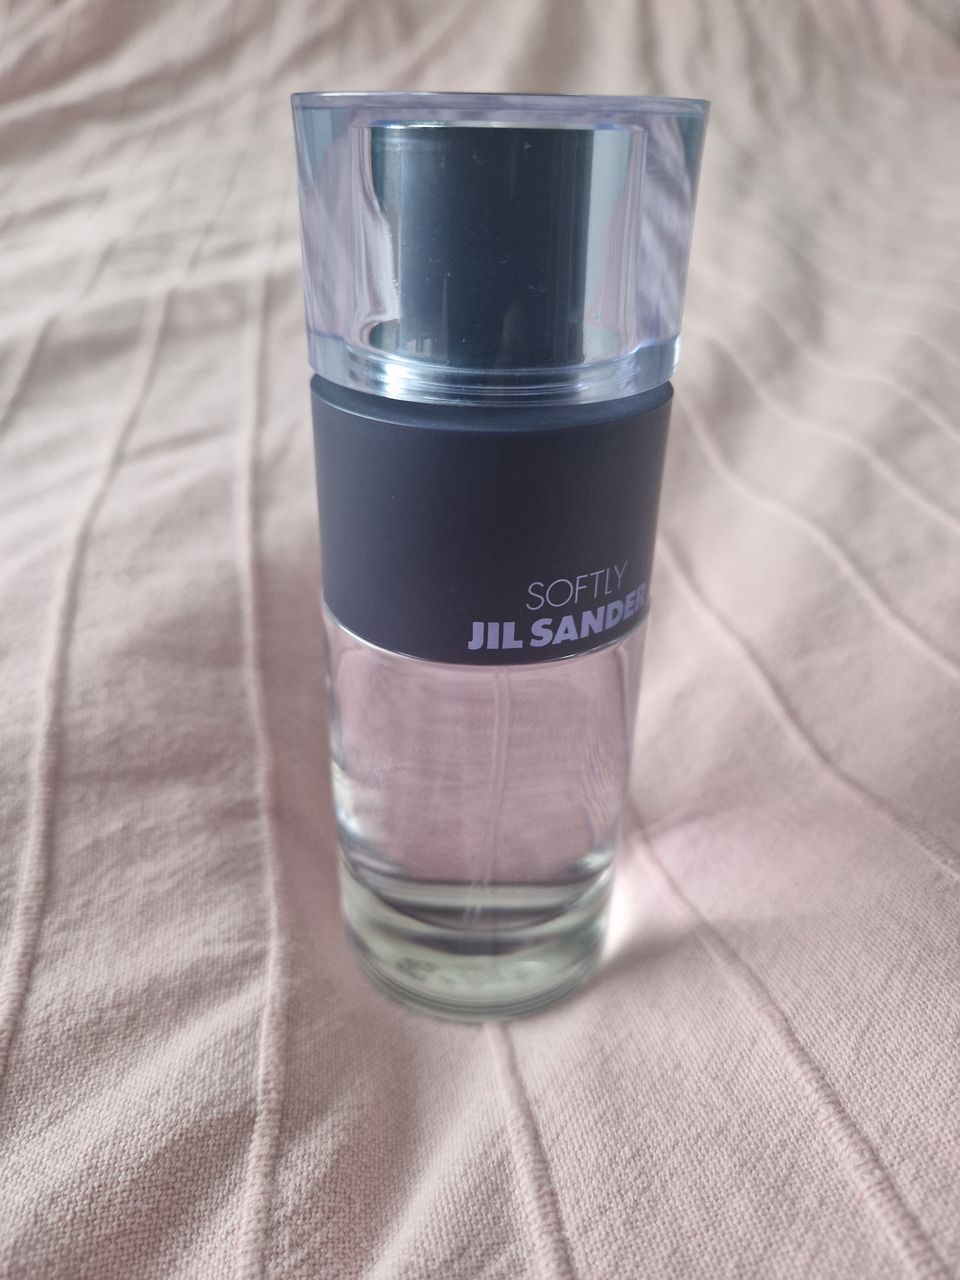 Jil Sander Softly 80ml perfume